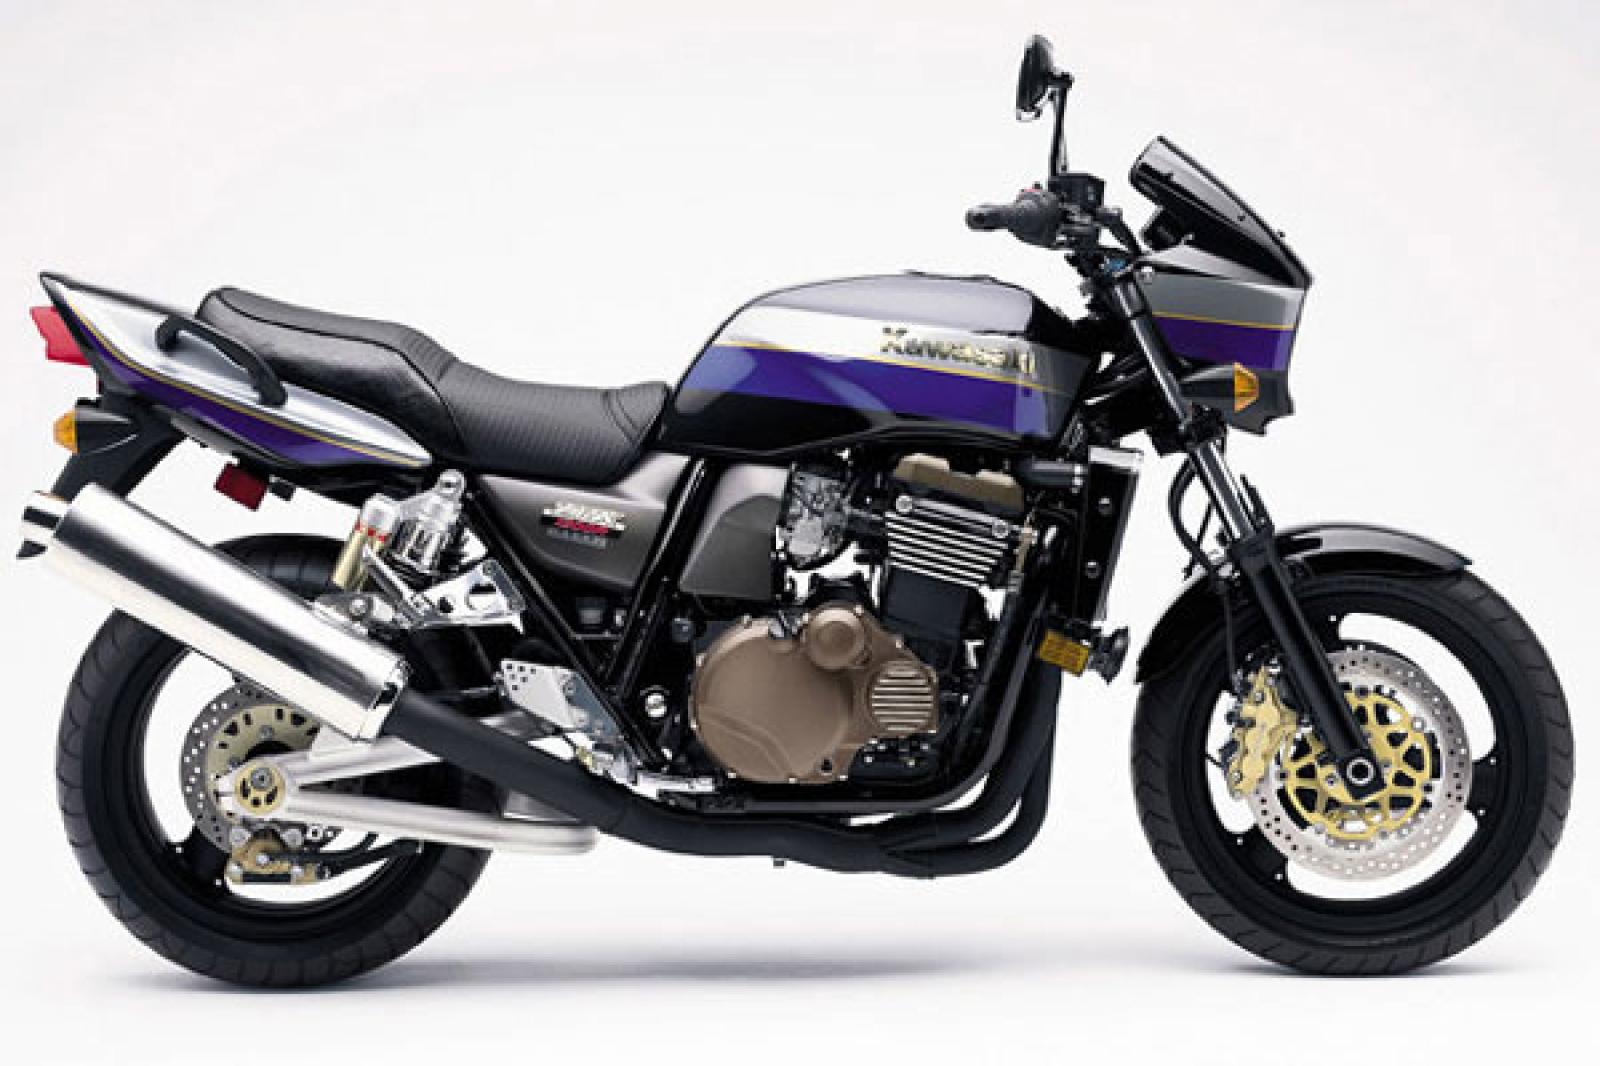 Мотоцикл kawasaki zrx 1200 s 2001 — разбираемся развернуто